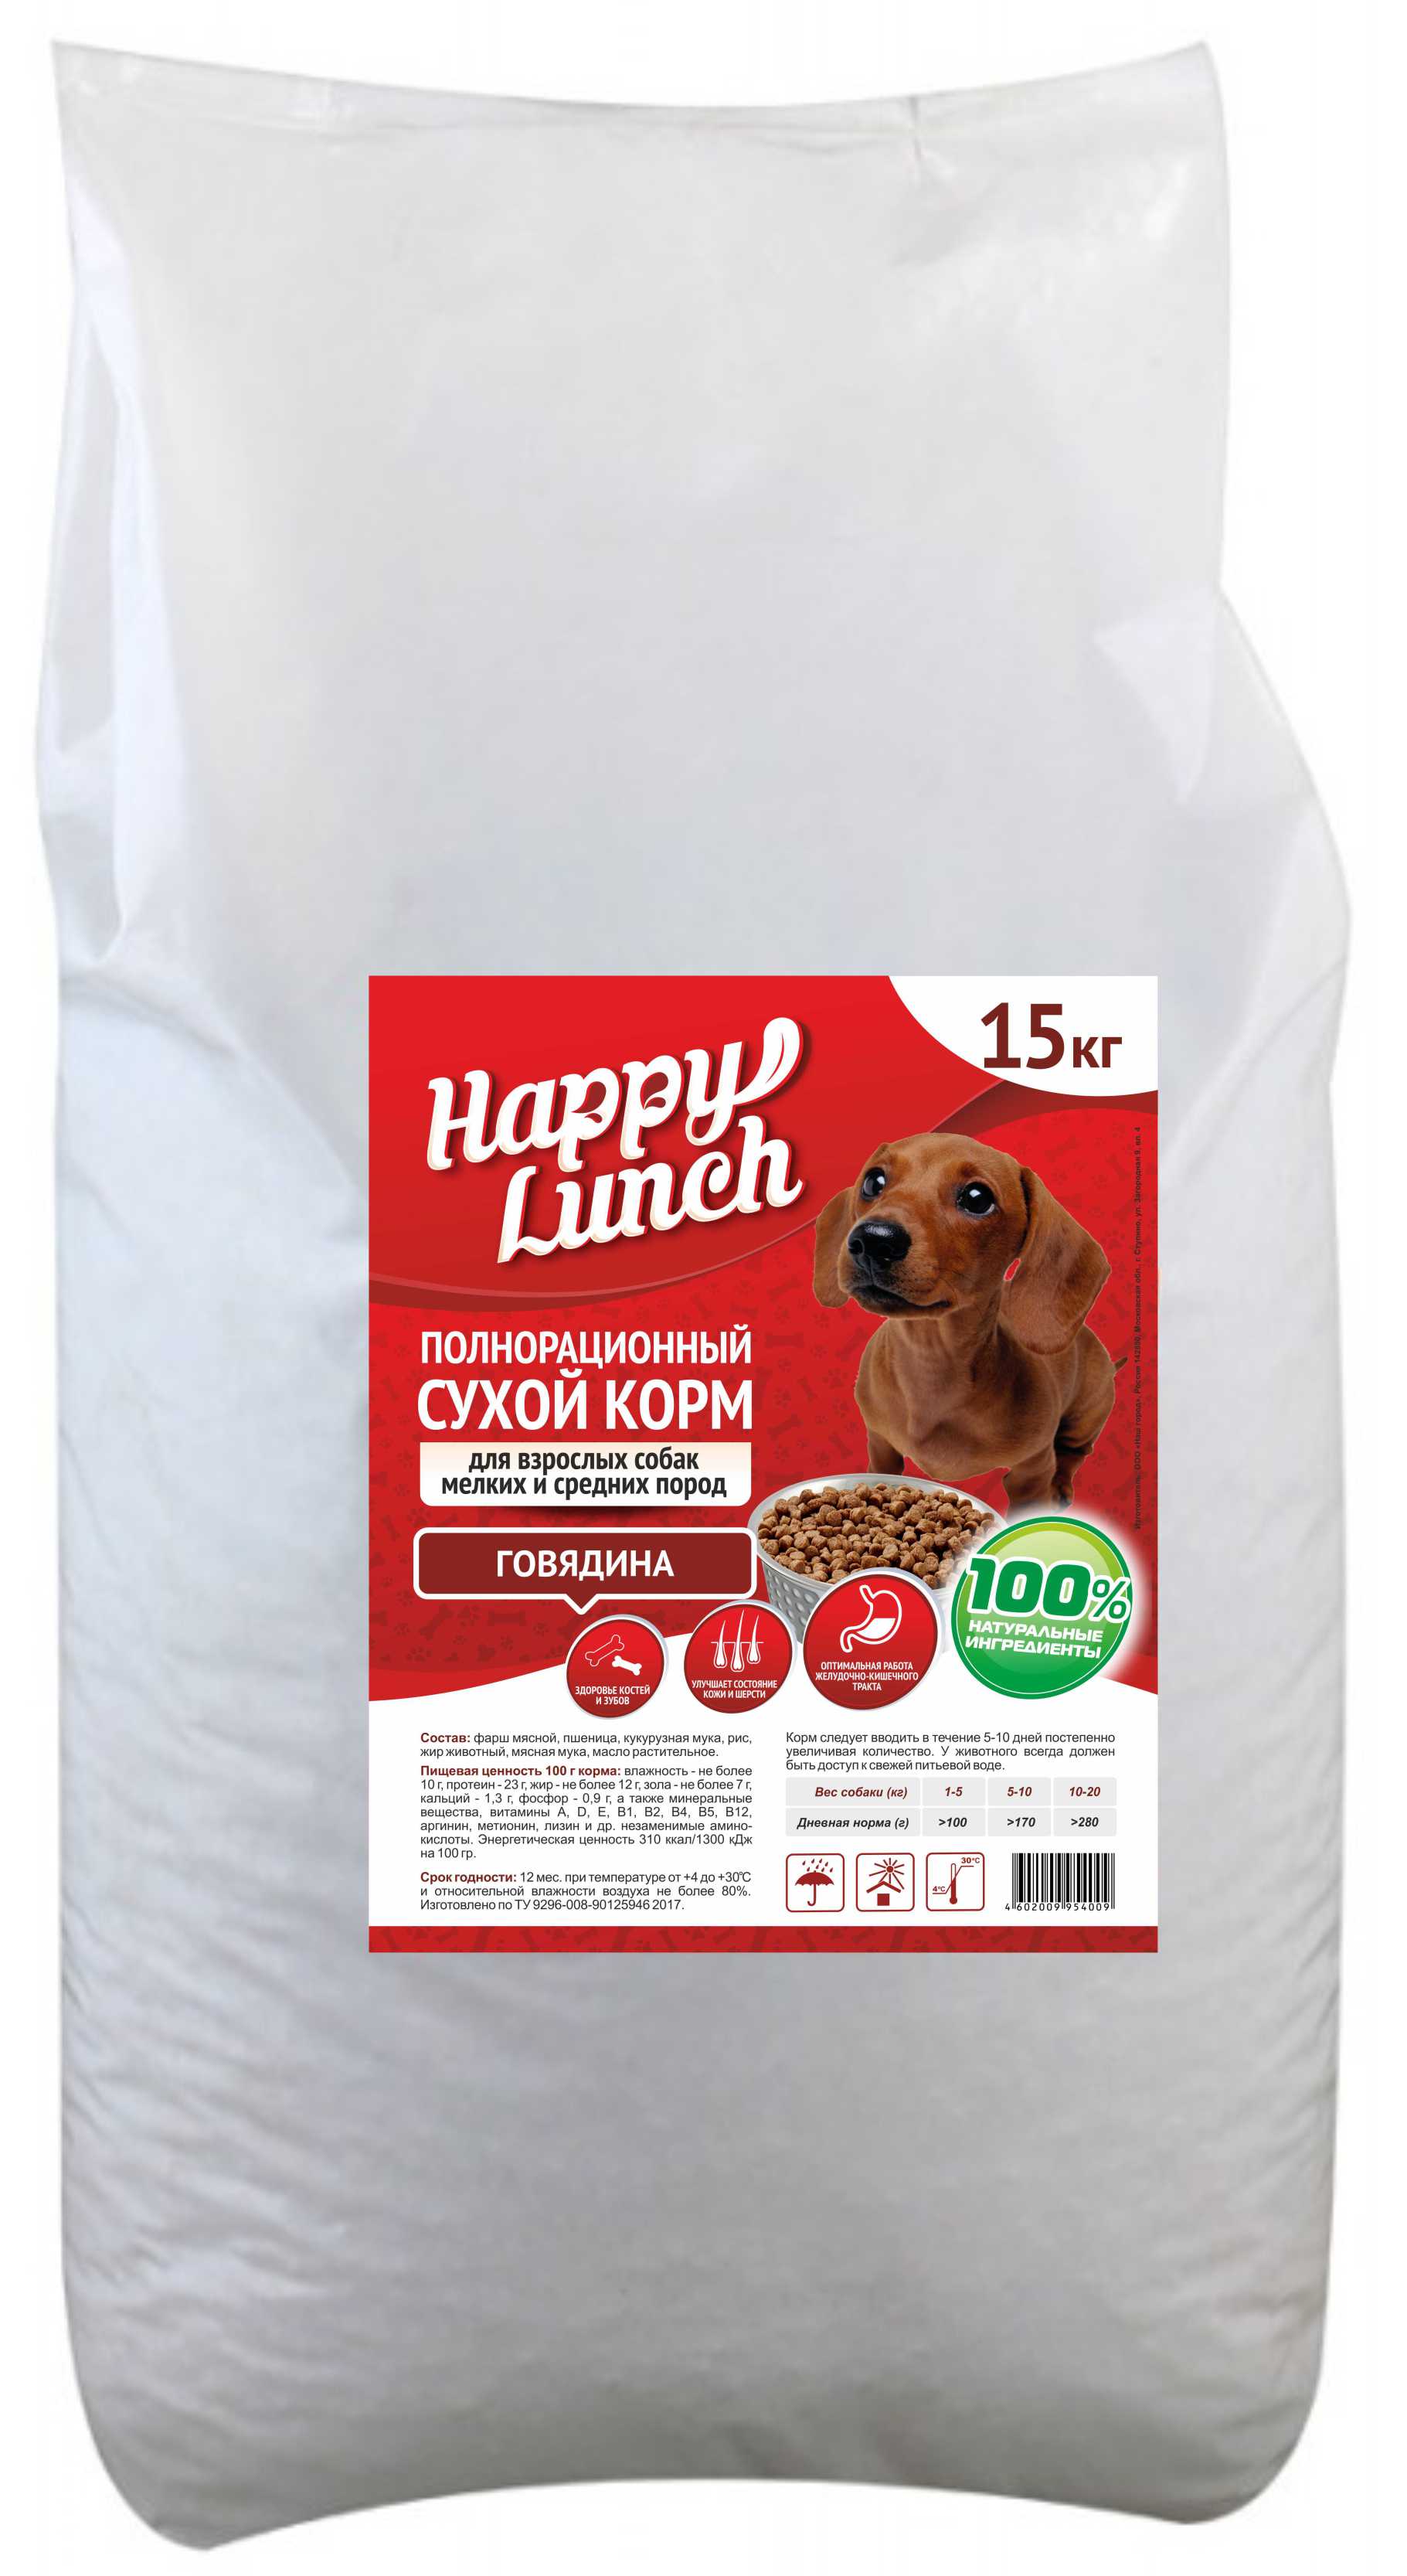 Happy Lunch сухой корм д/взрослых собак мелких и средних пород (говядина)15 кг 1